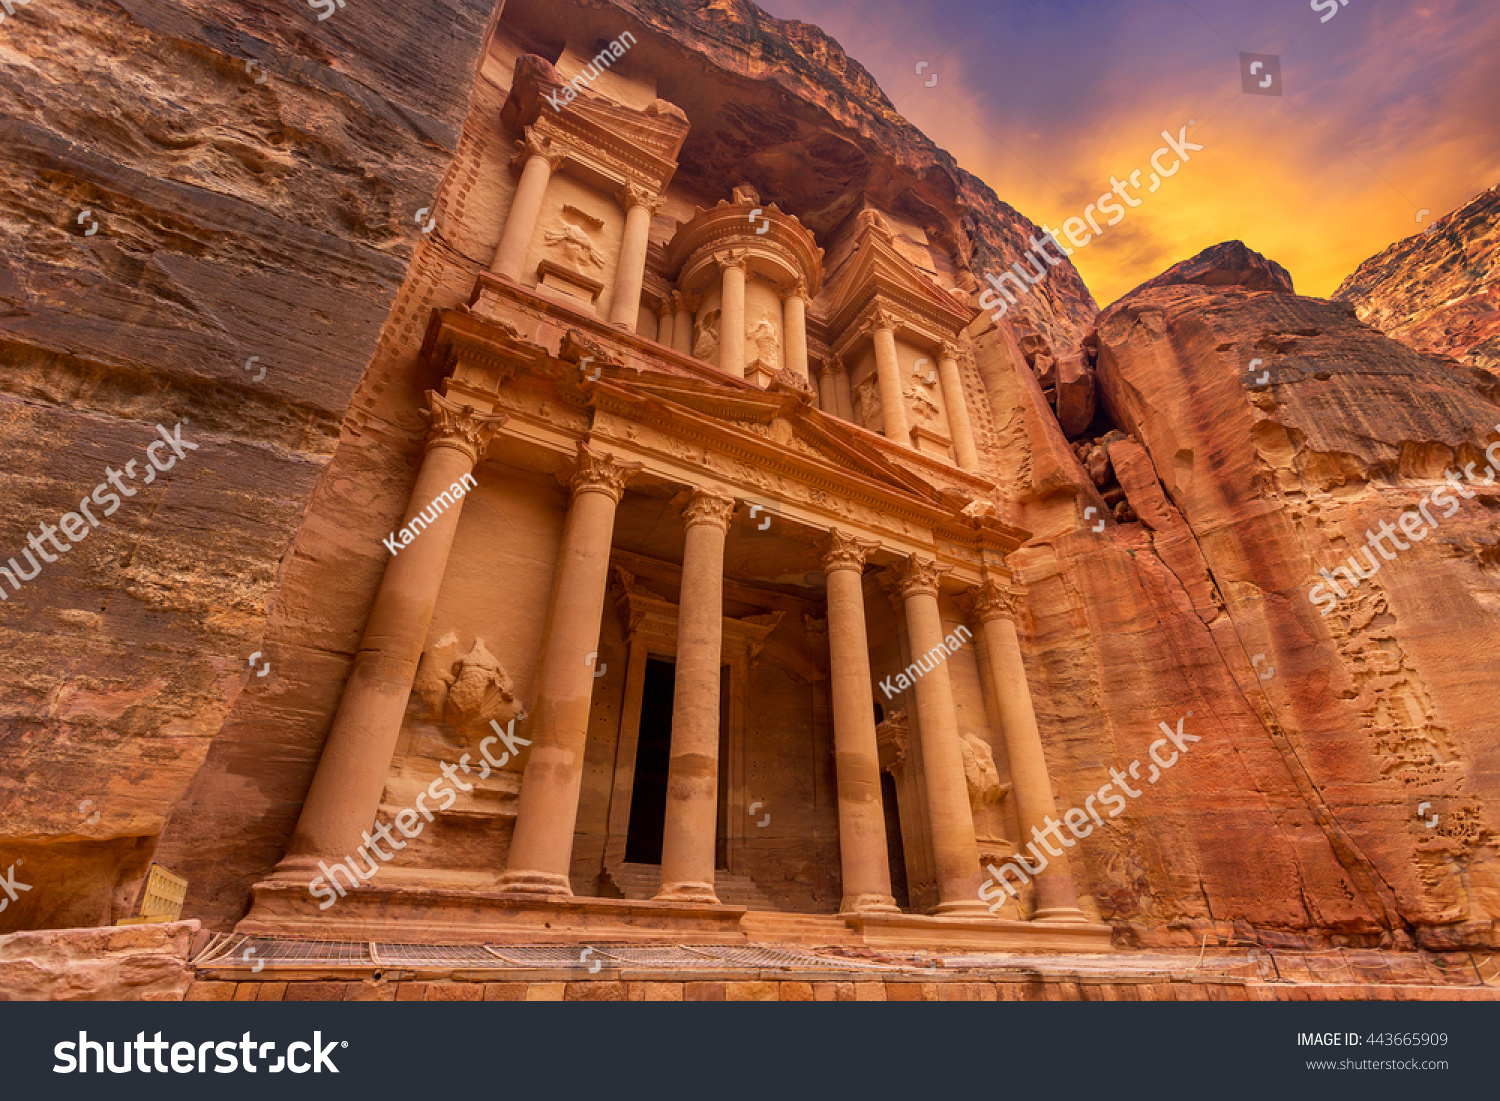 Ancient temple in Petra, Jordan #443665909